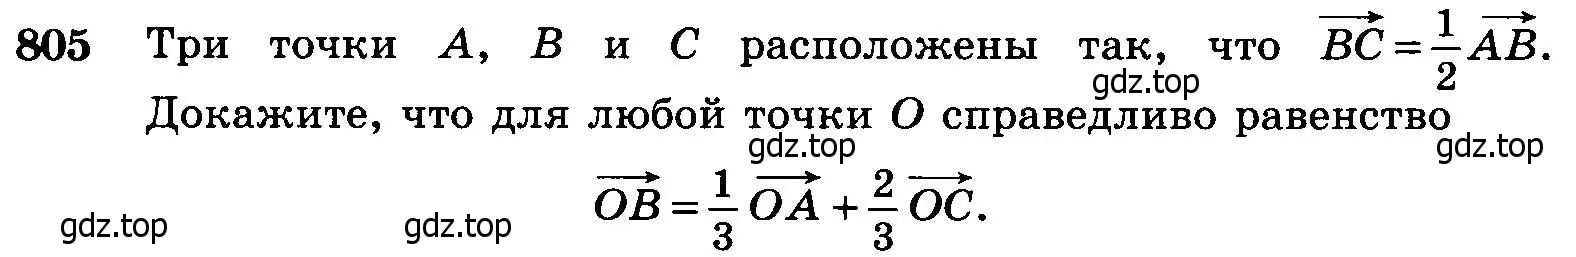 Условие номер 805 (страница 210) гдз по геометрии 7-9 класс Атанасян, Бутузов, учебник